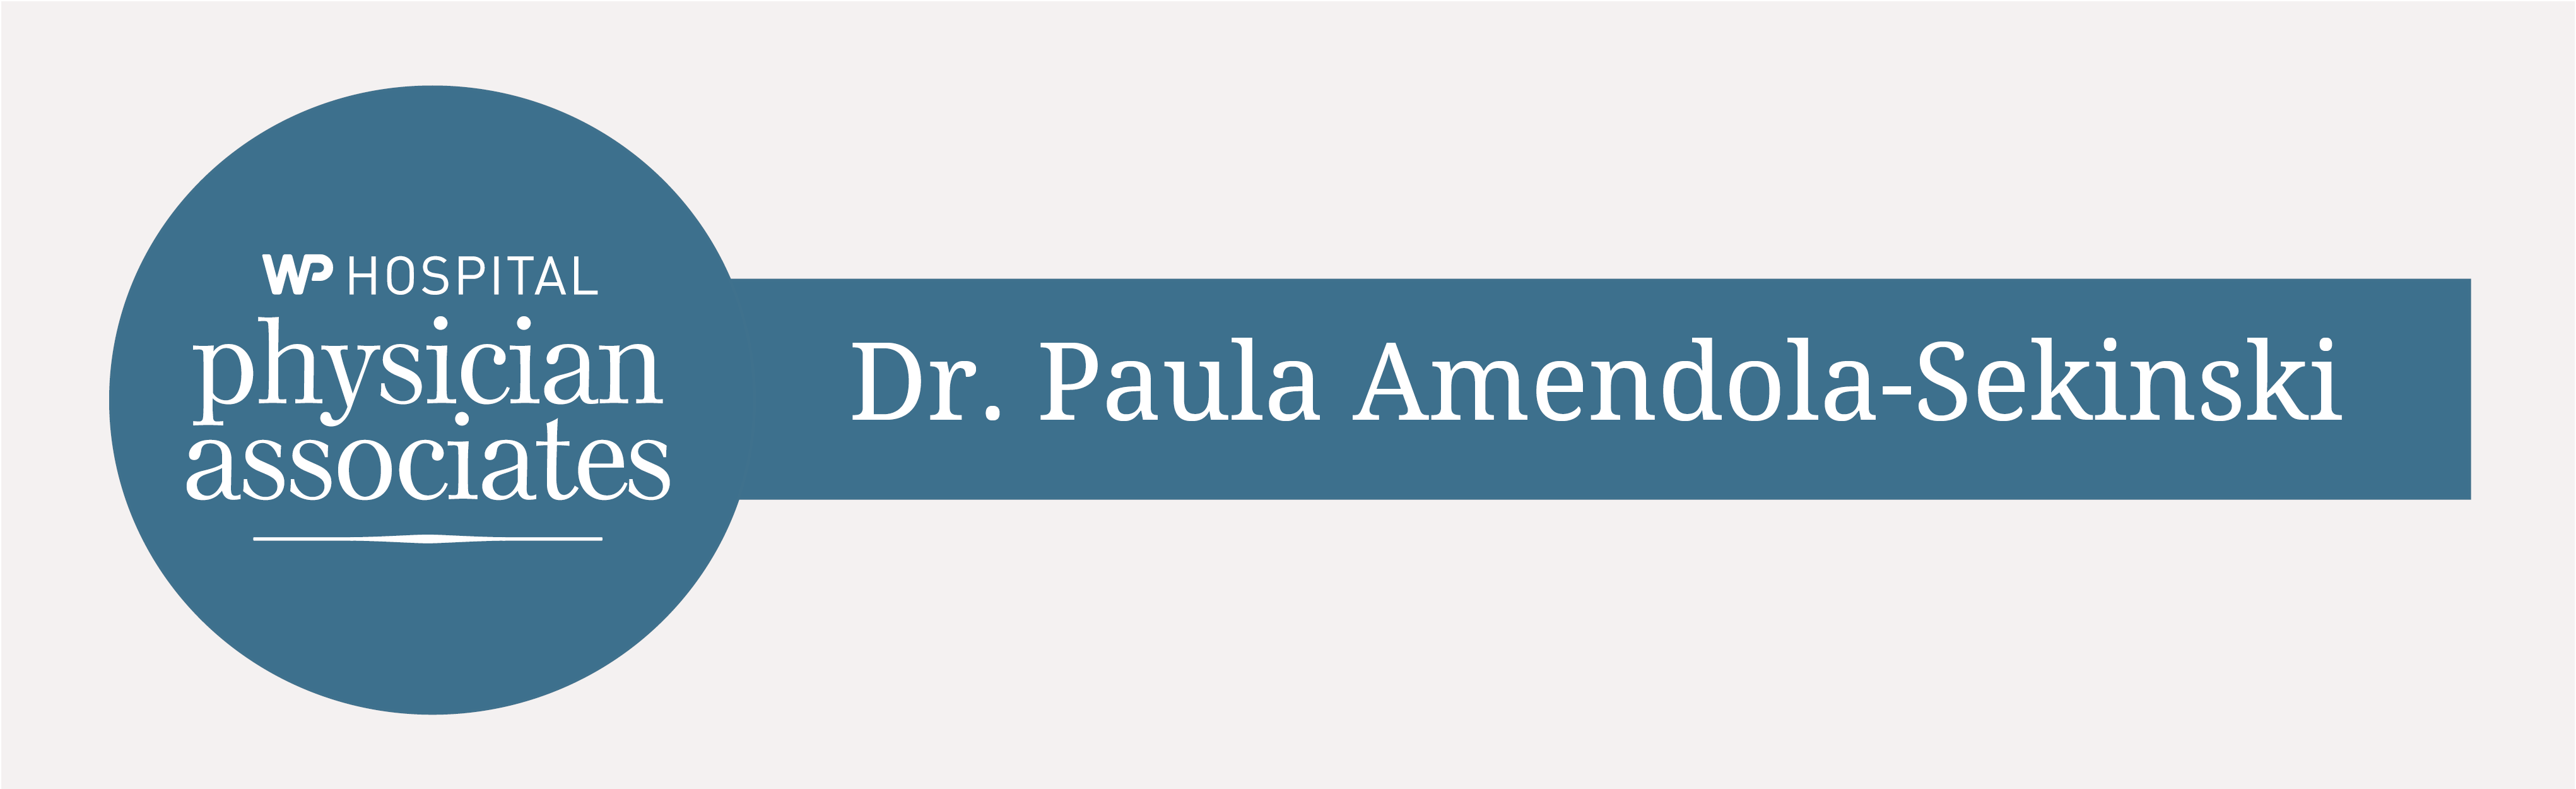 Dr. Paula Amendola-Sekinski, DO, Joins White Plains Hospital Physician Associates